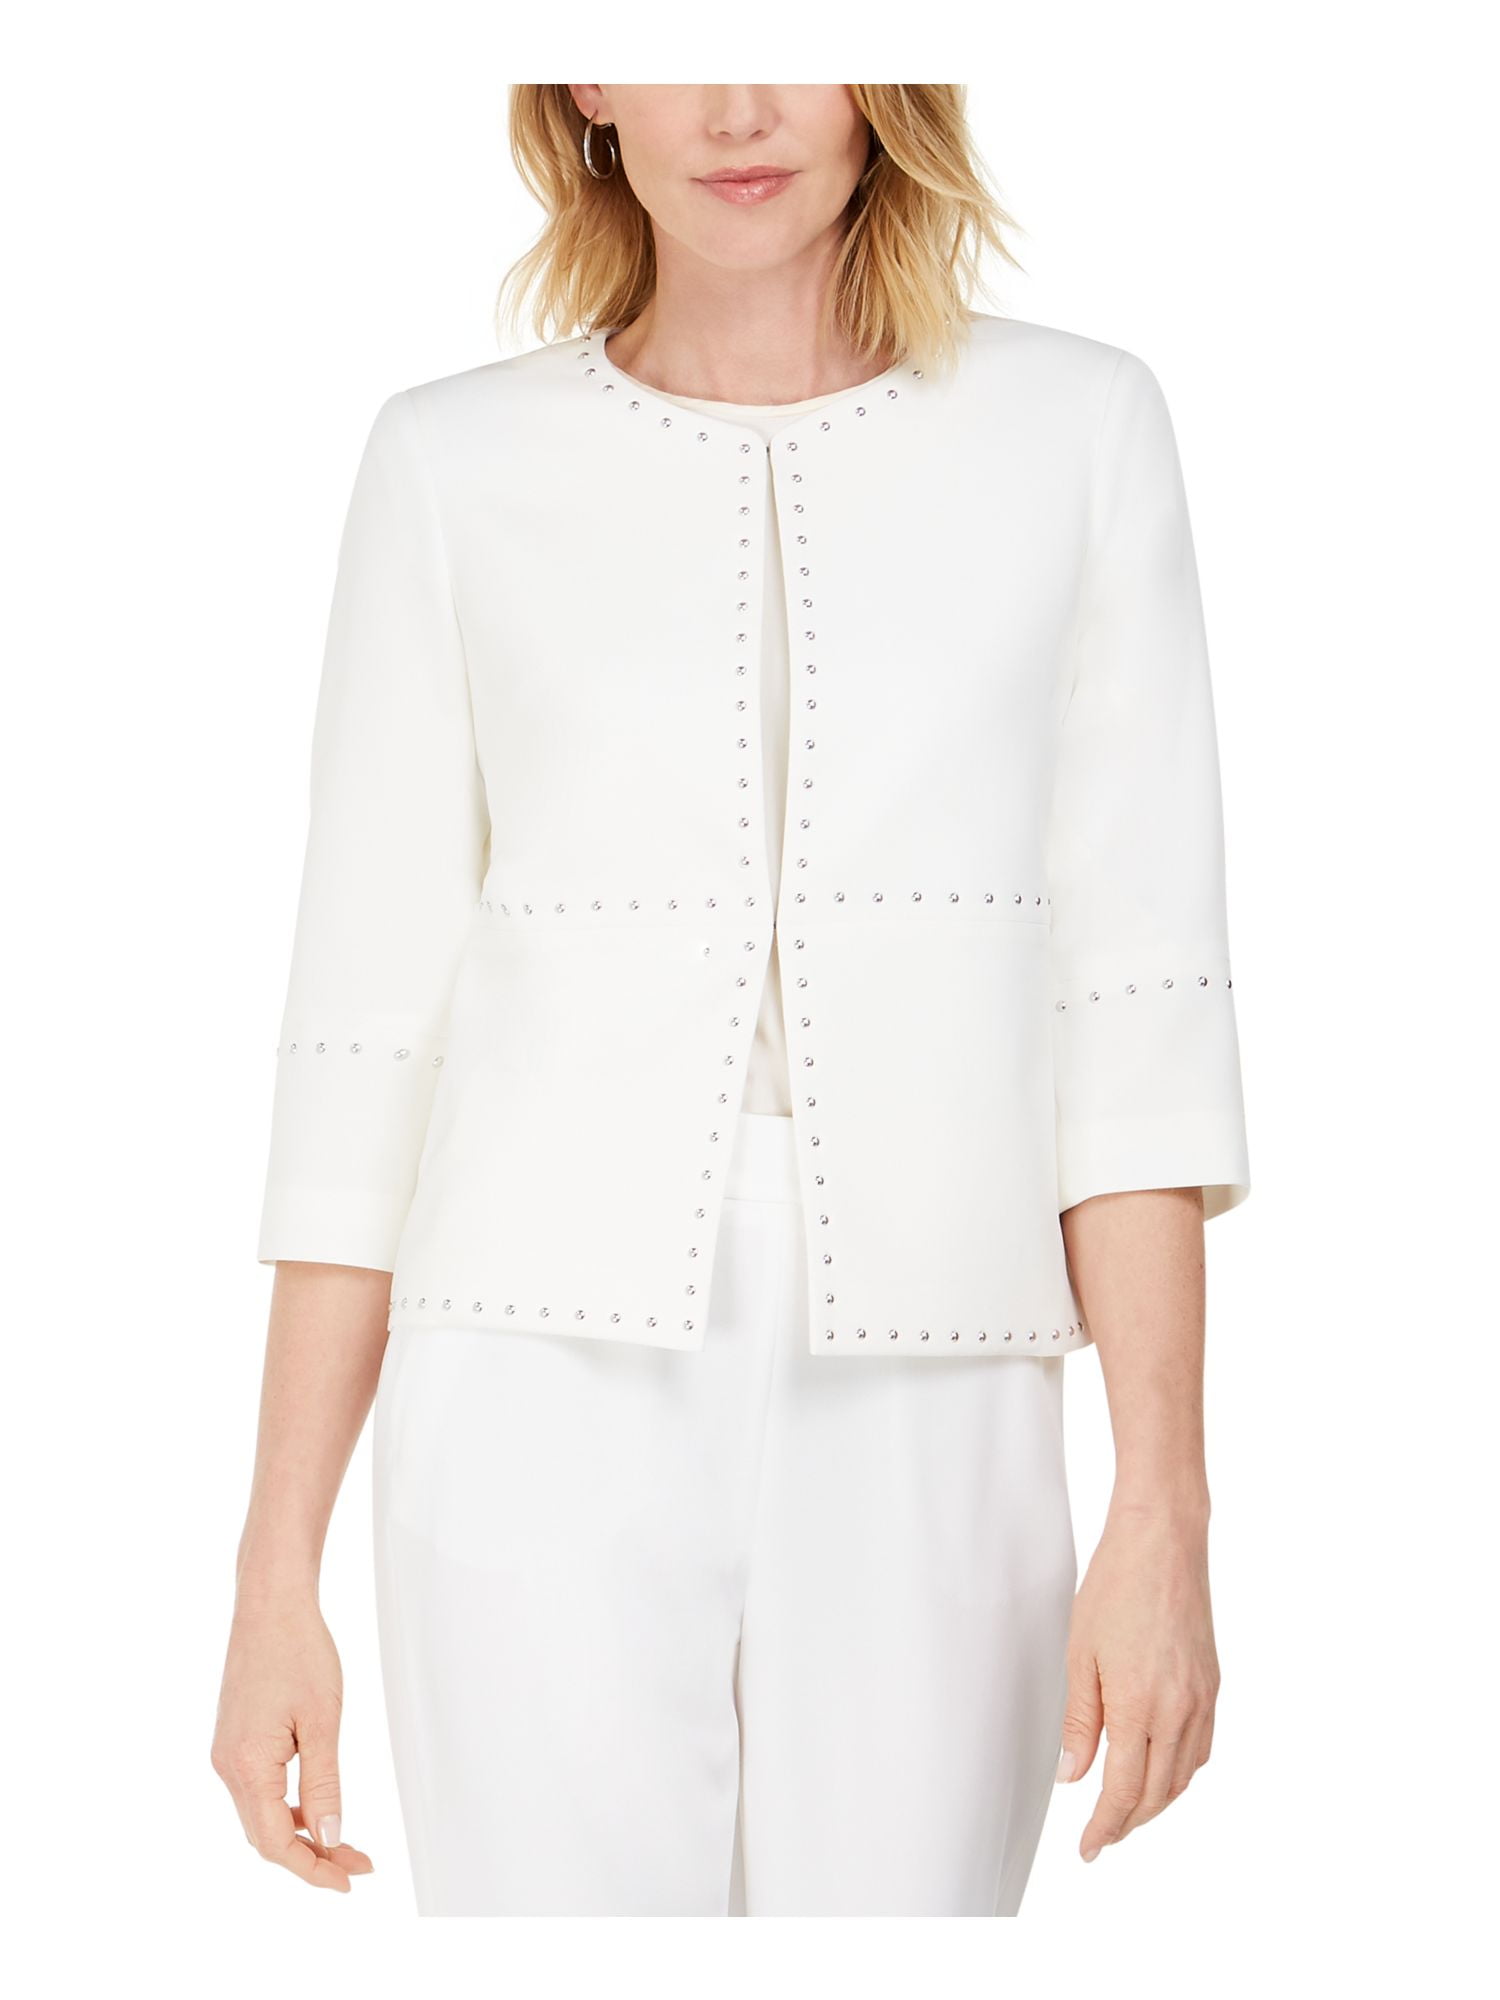 Kasper Womens Studded Suit Separate Jacket White M - Walmart.com